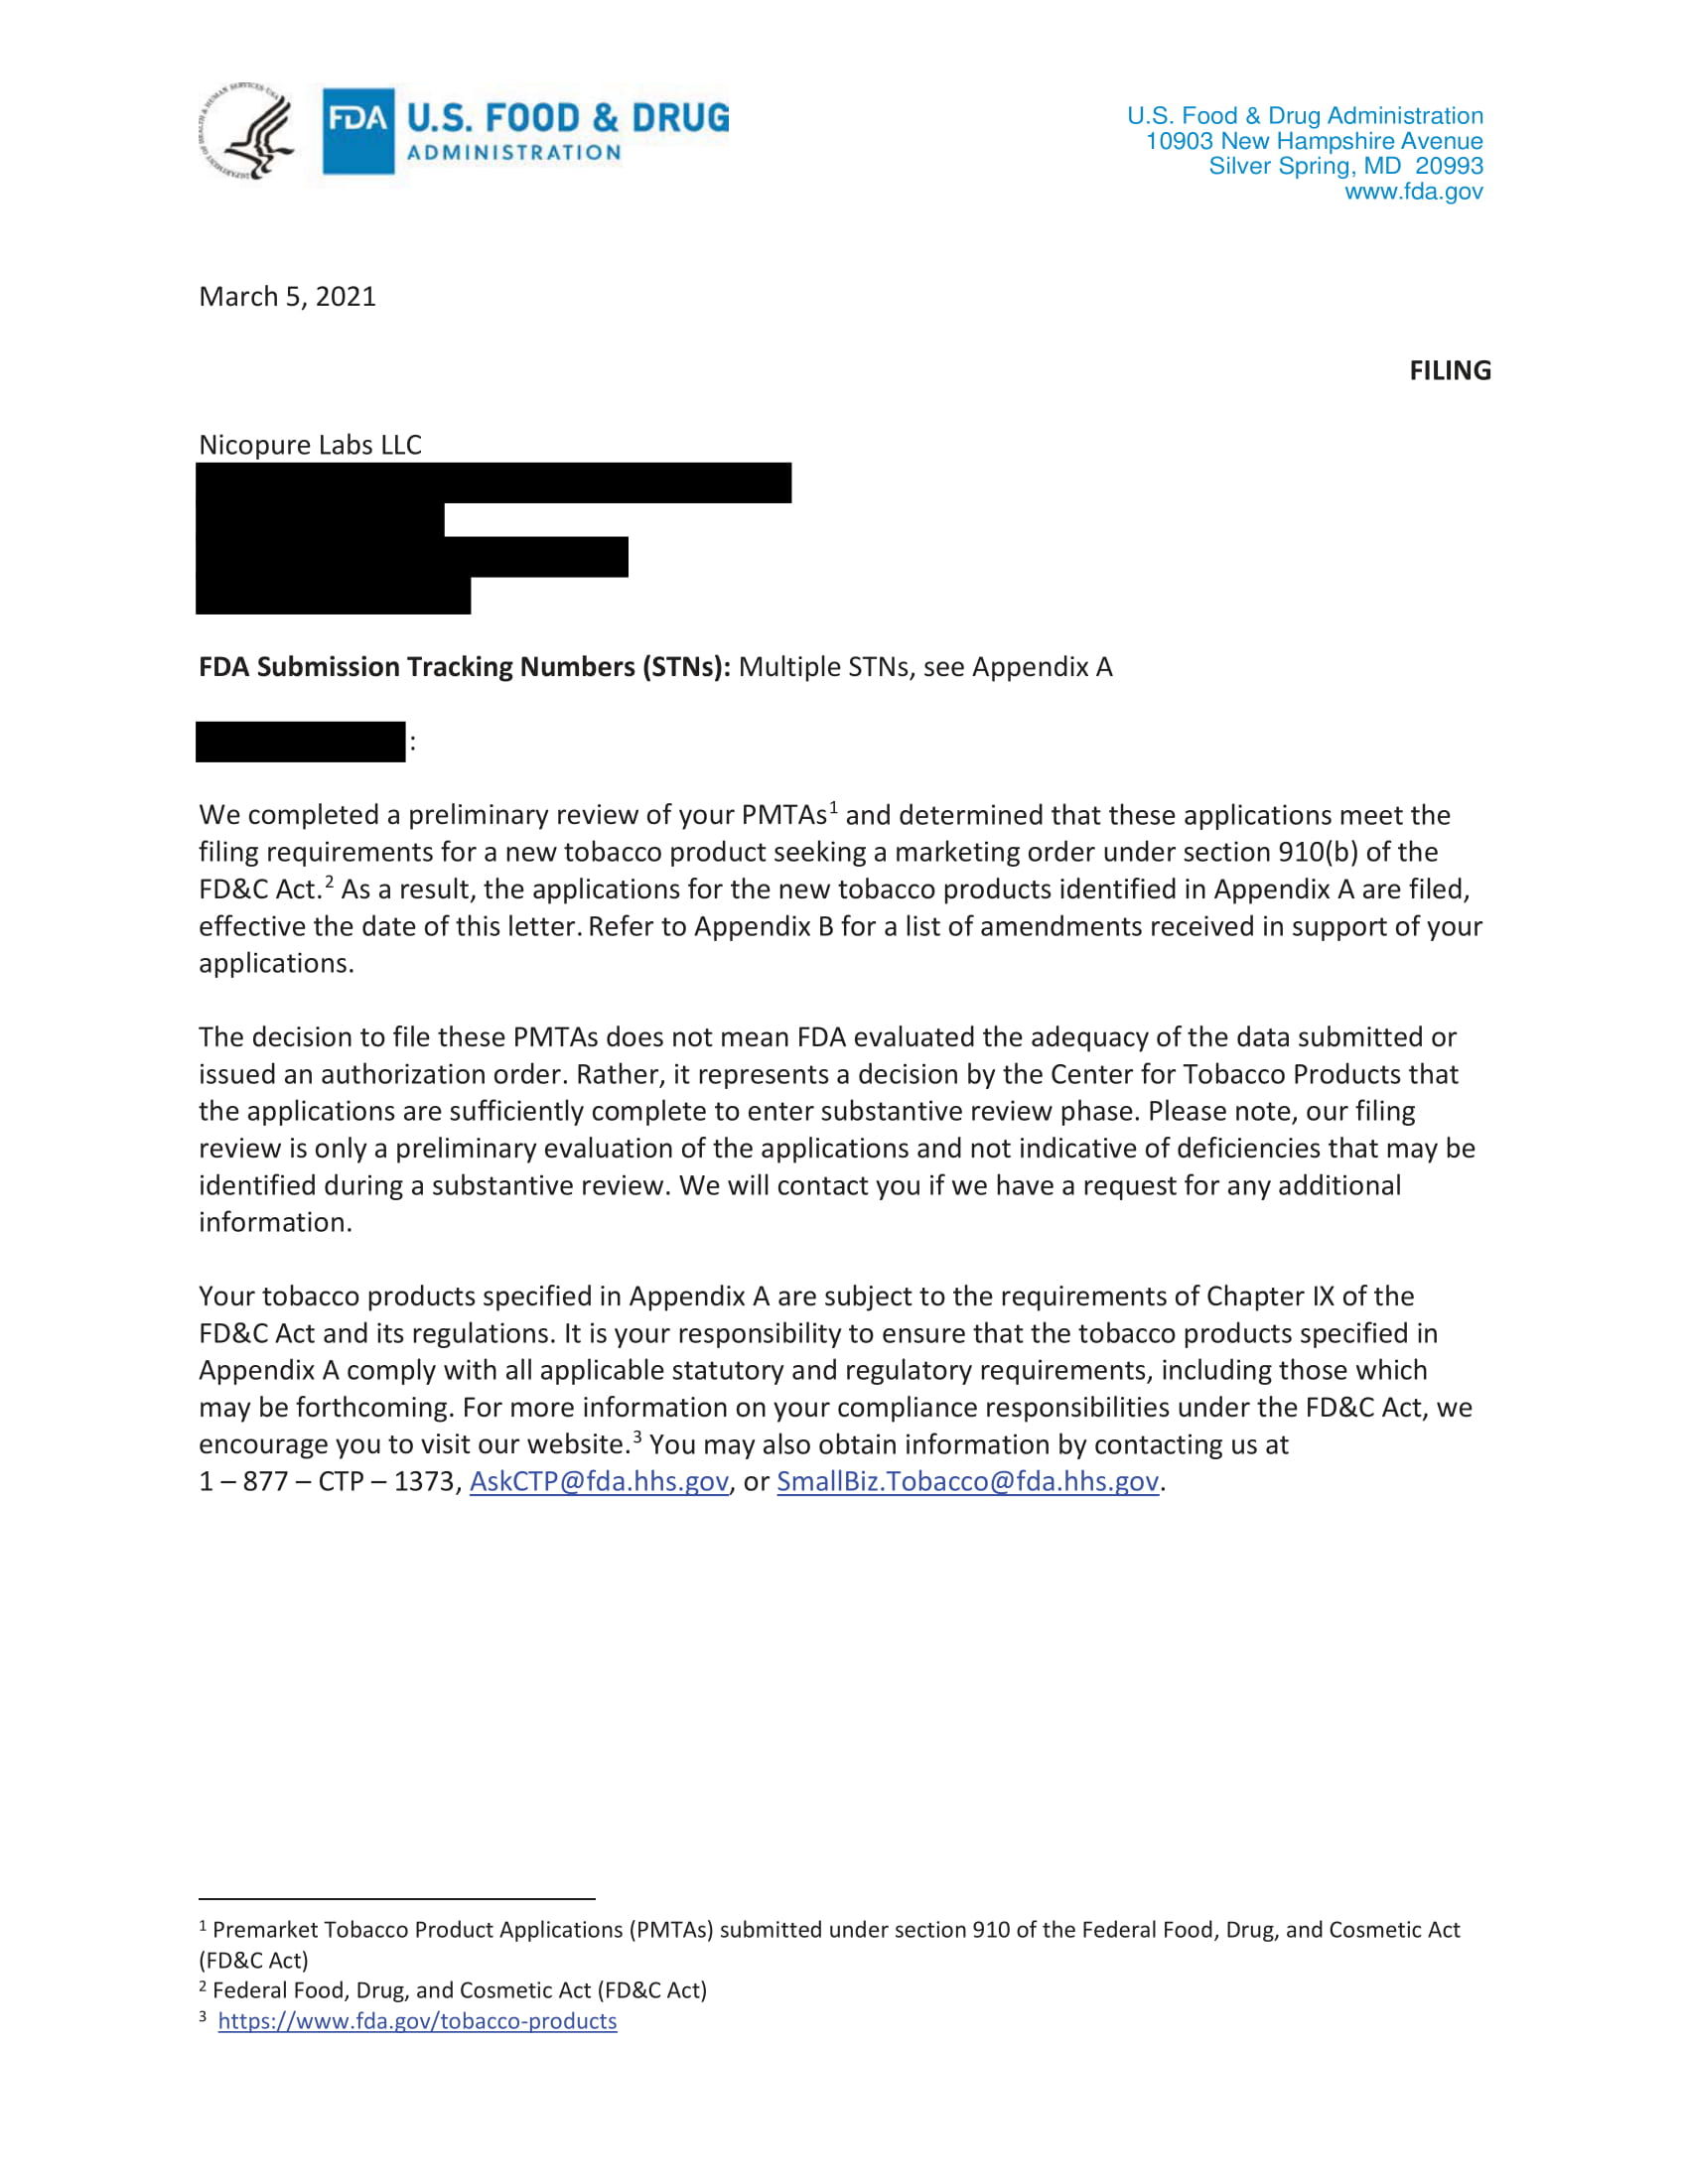 FDA Acceptance Letter